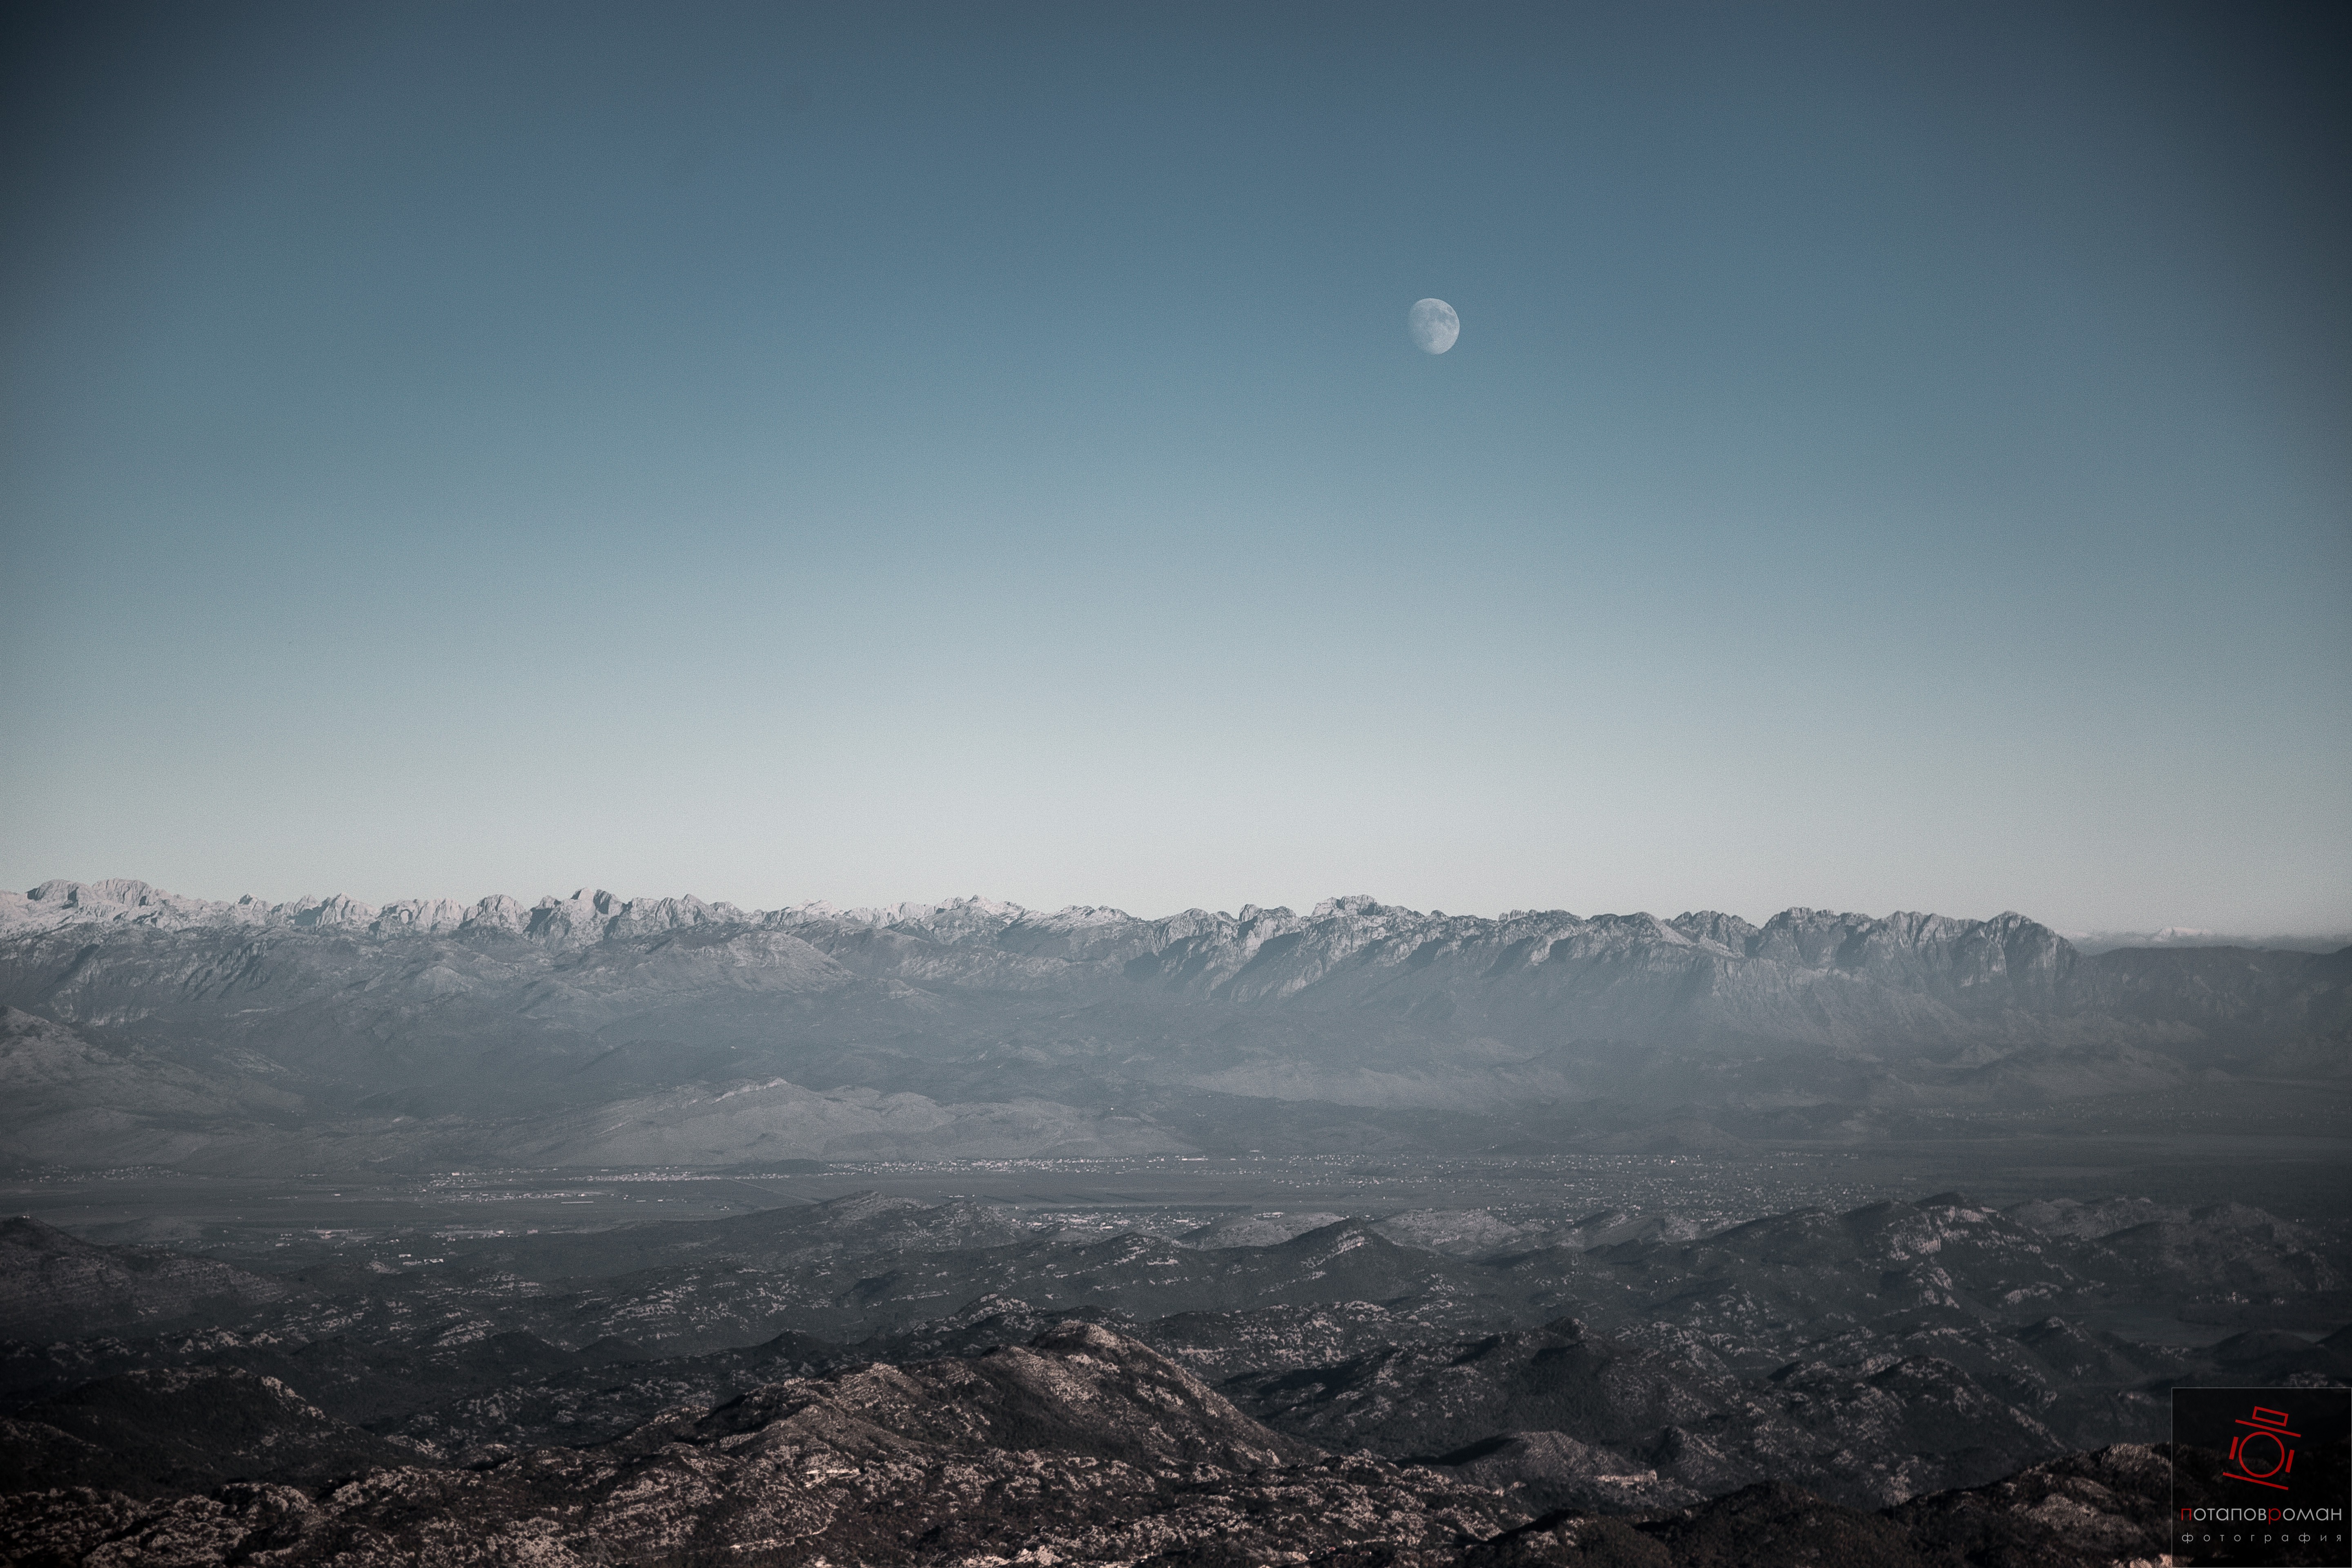 General 5760x3840 Moon sky landscape nature mountains